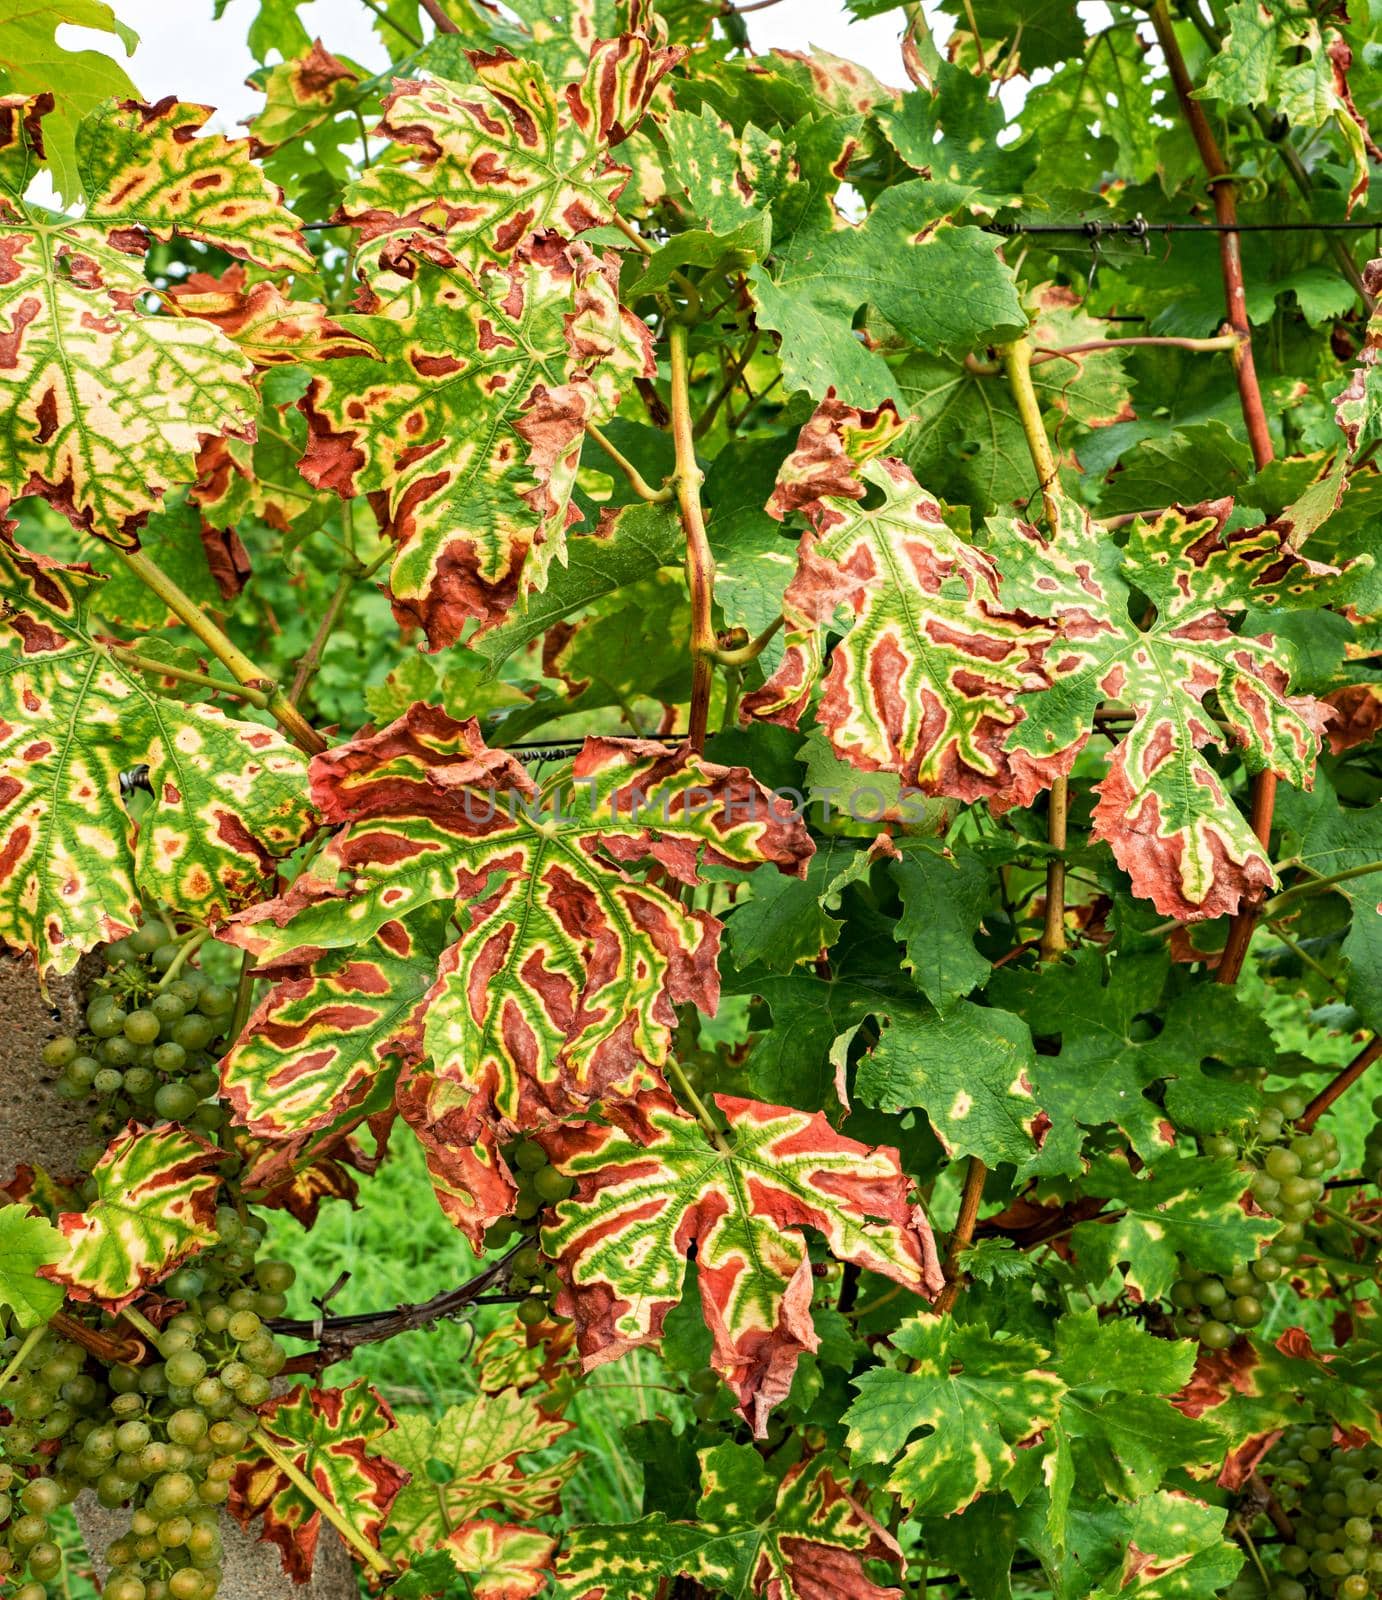 Grapevine stripe diseas eesca appear as dark red or yellow stripes on leaves by rdonar2